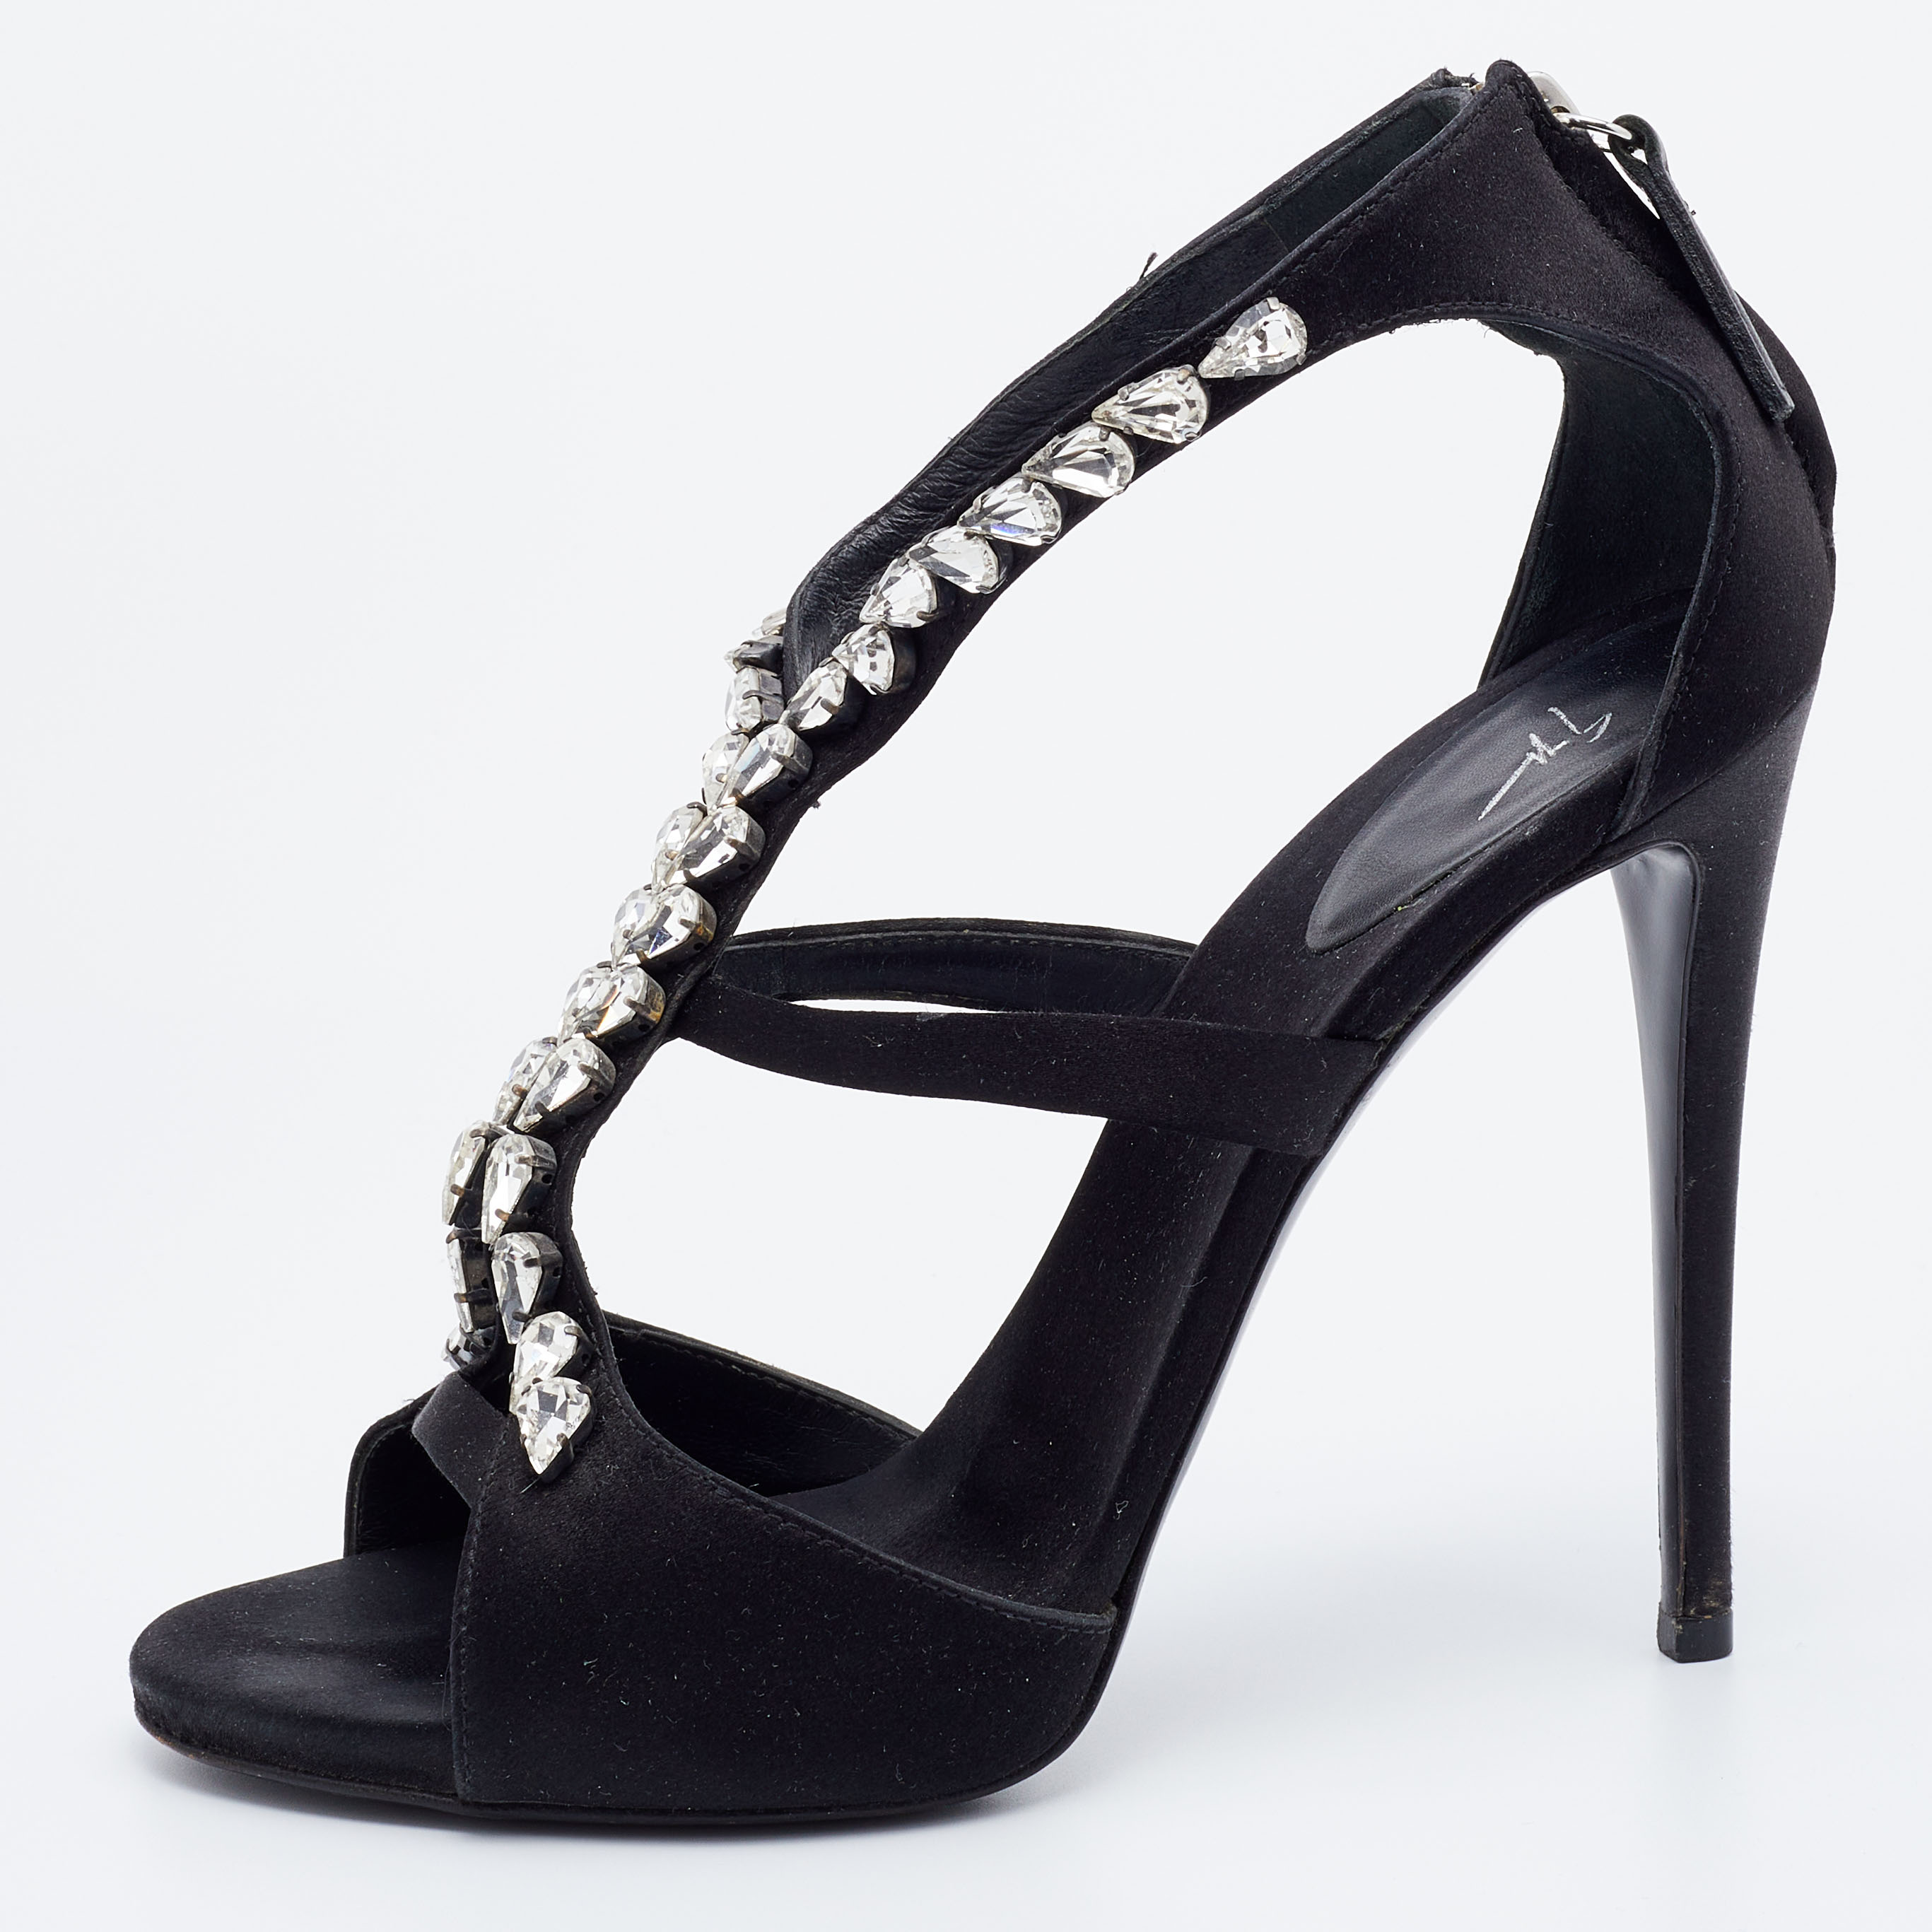 Giuseppe zanotti black satin crystal embellished strappy sandals size 37.5